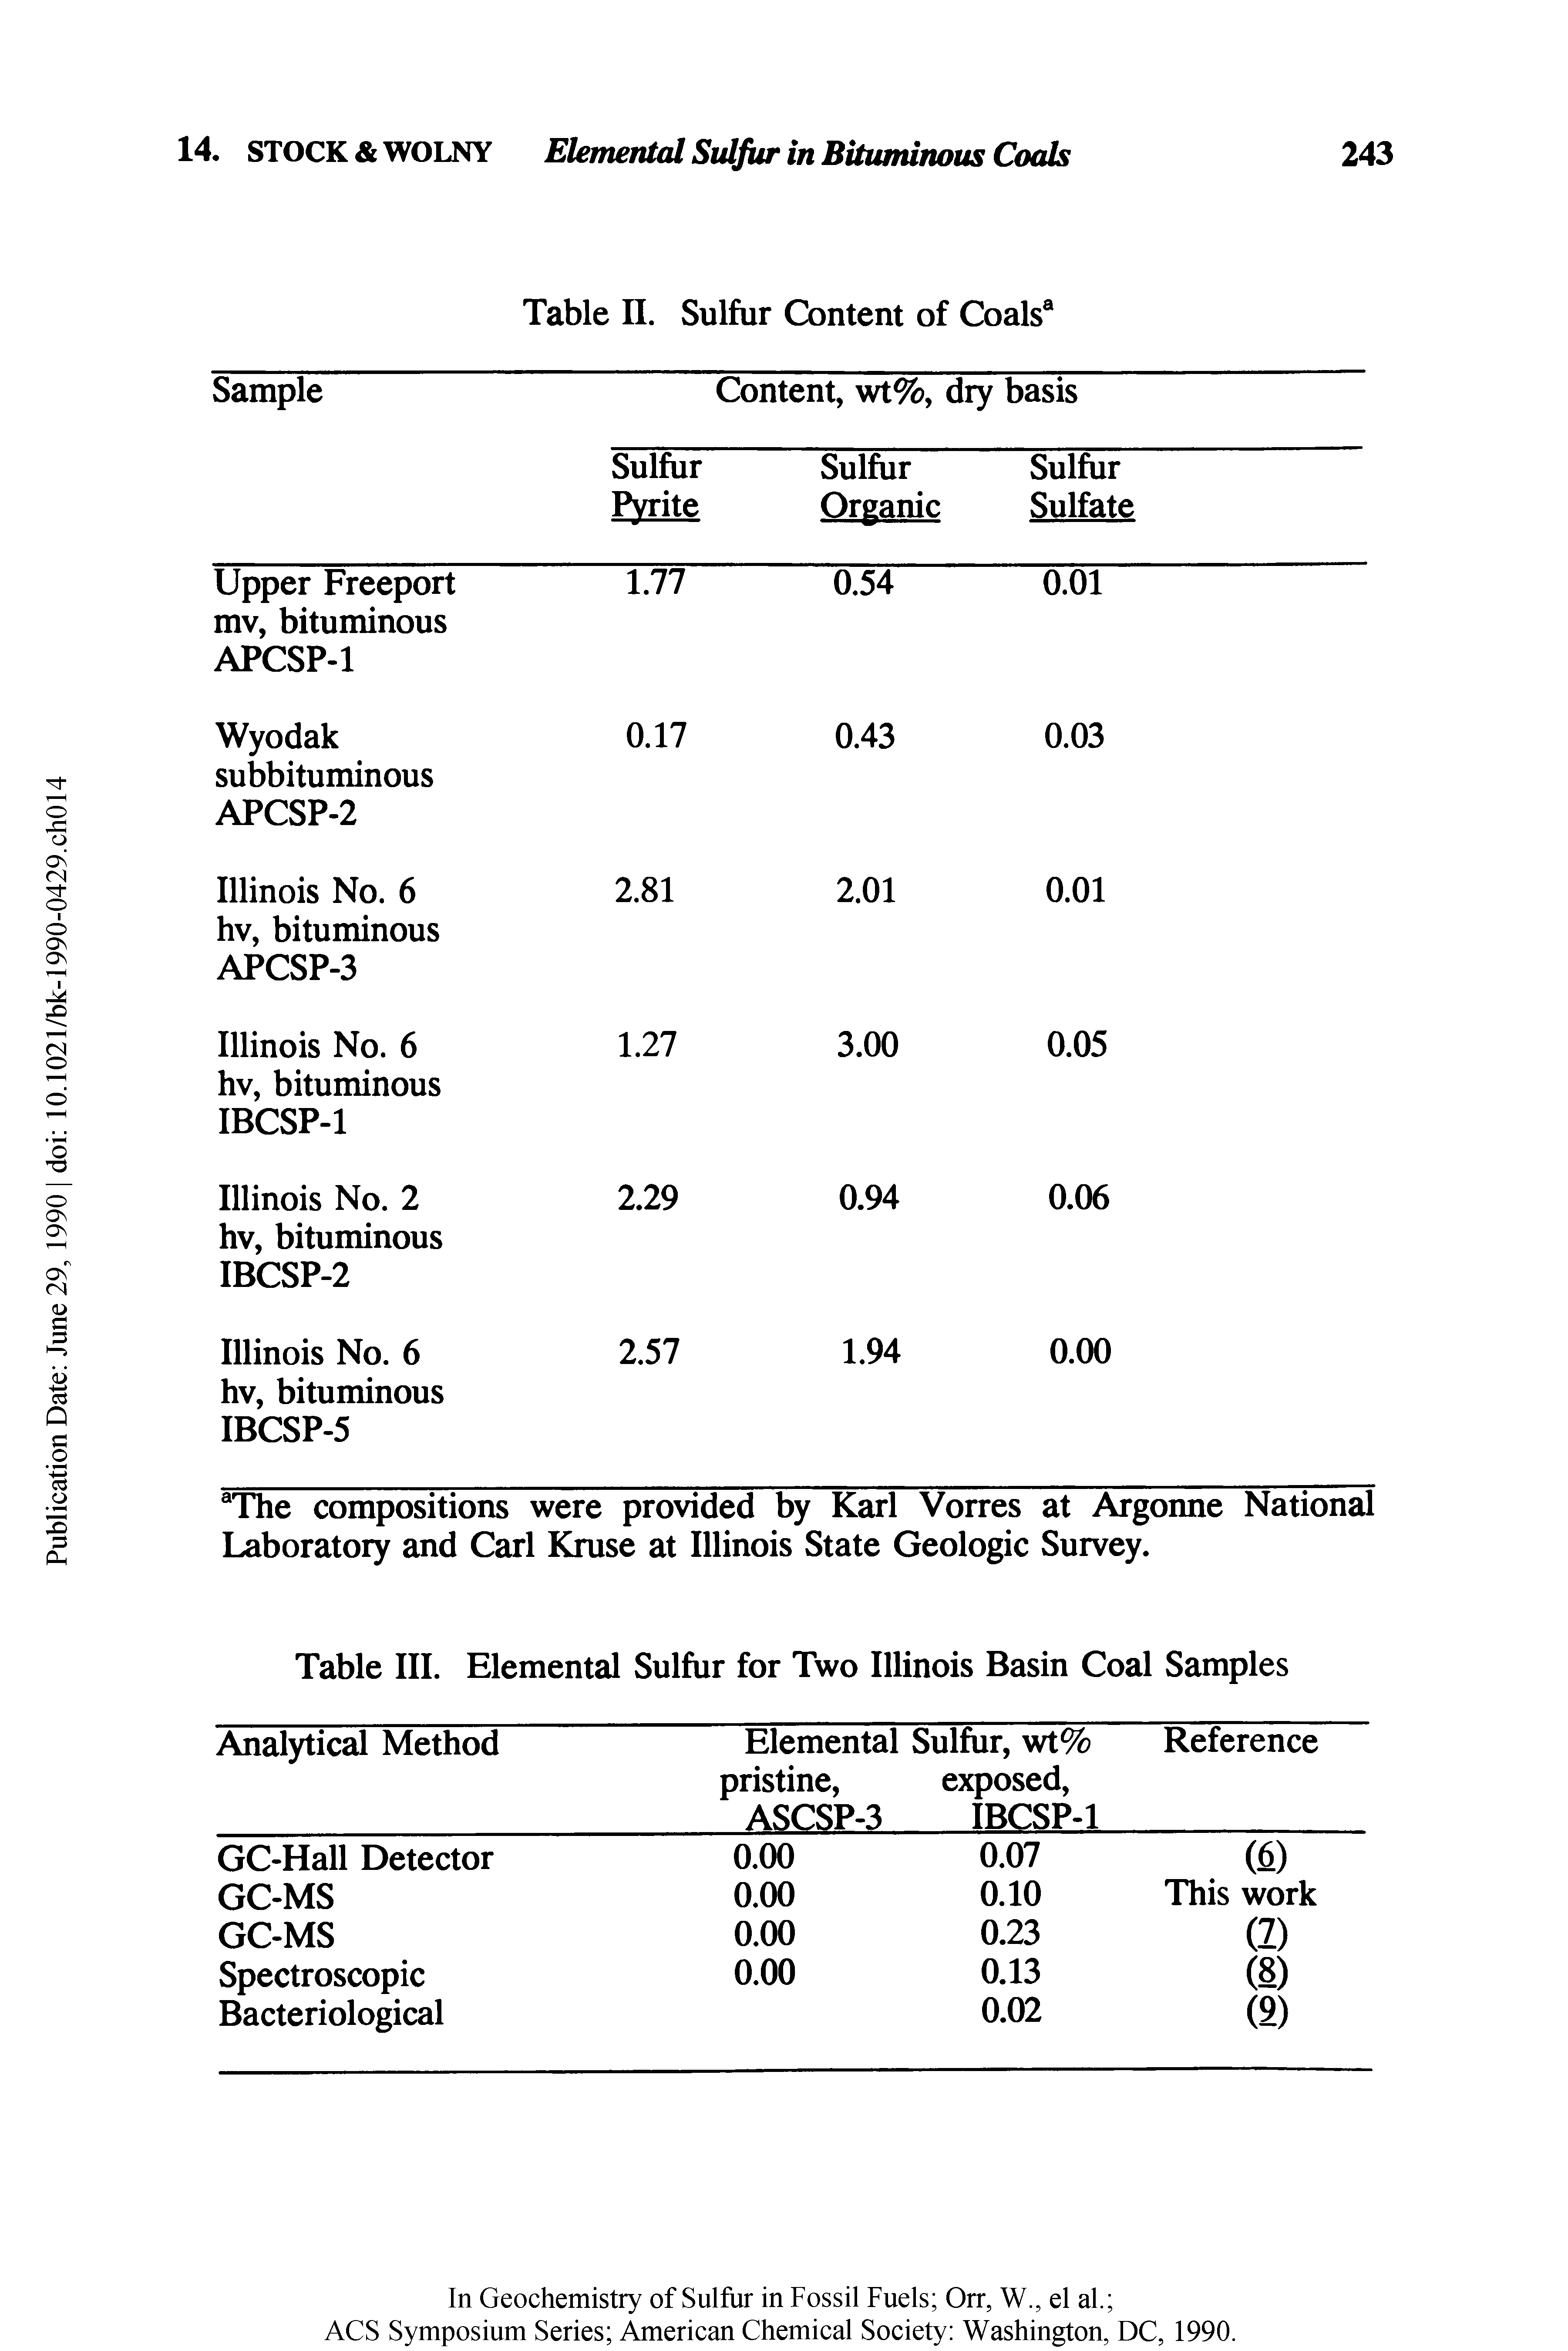 Table III. Elemental Sulfur for Two Illinois Basin Coal Samples...